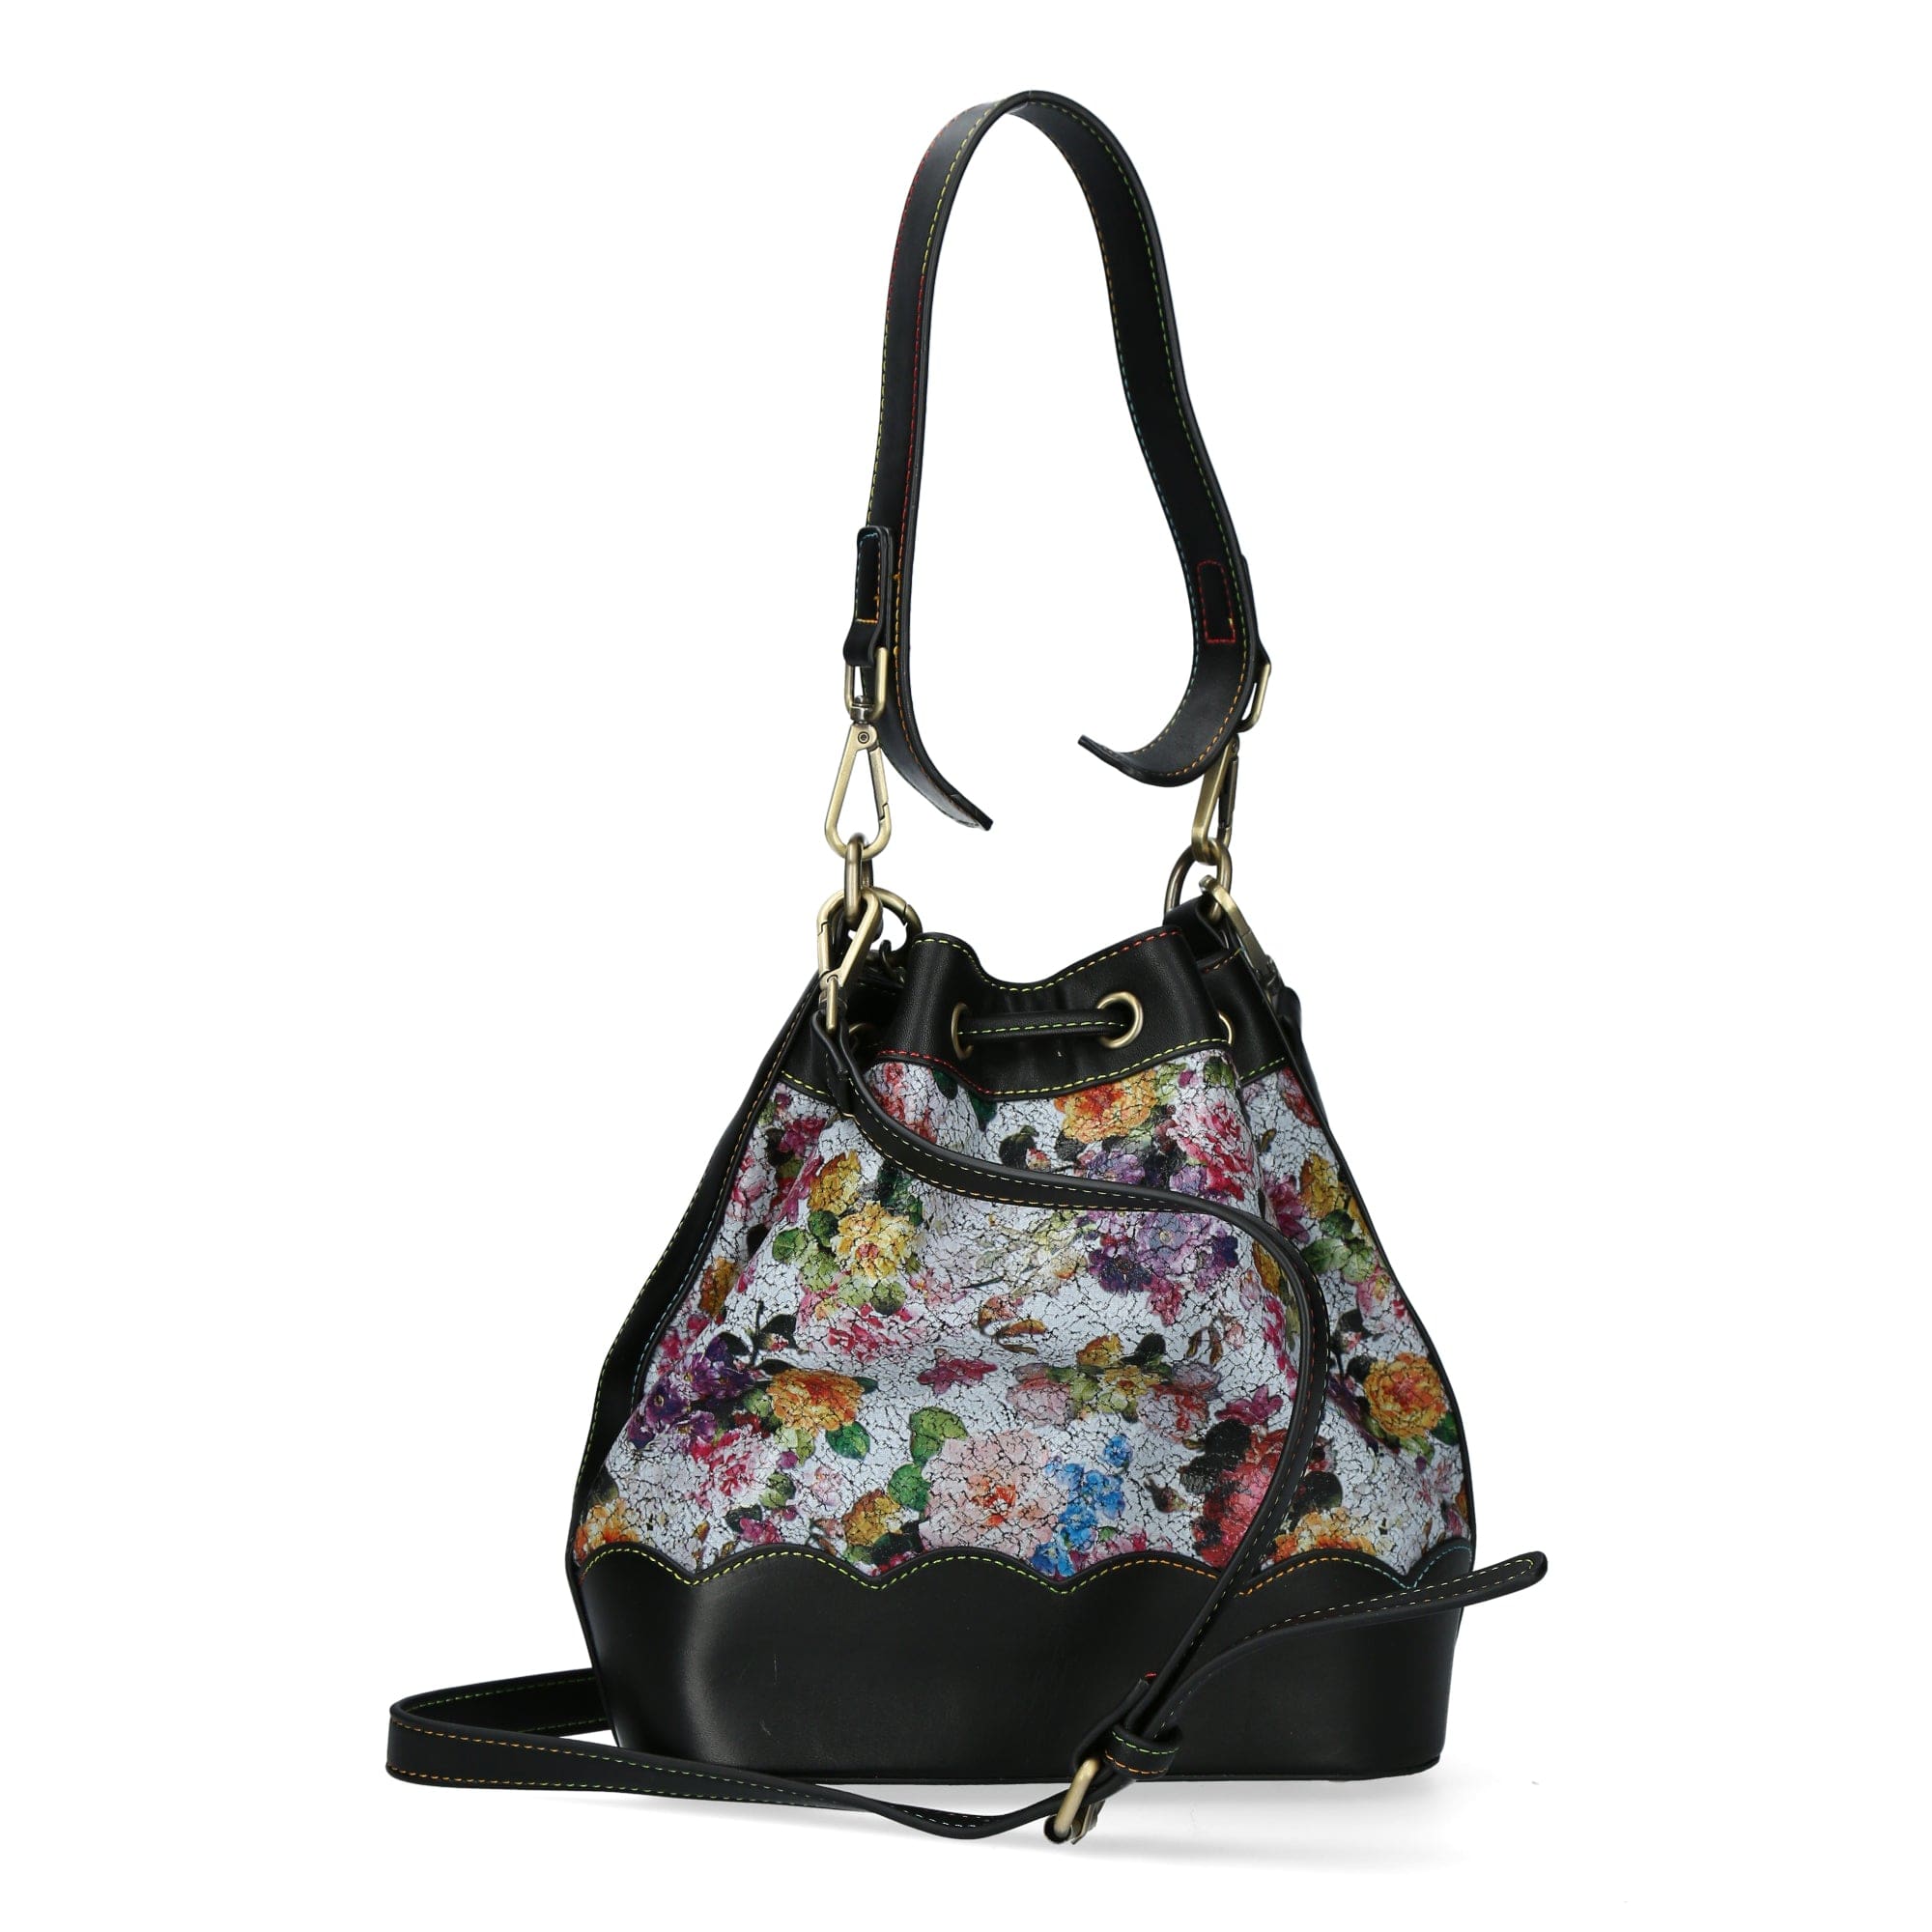 Handbag 4811 - Bag